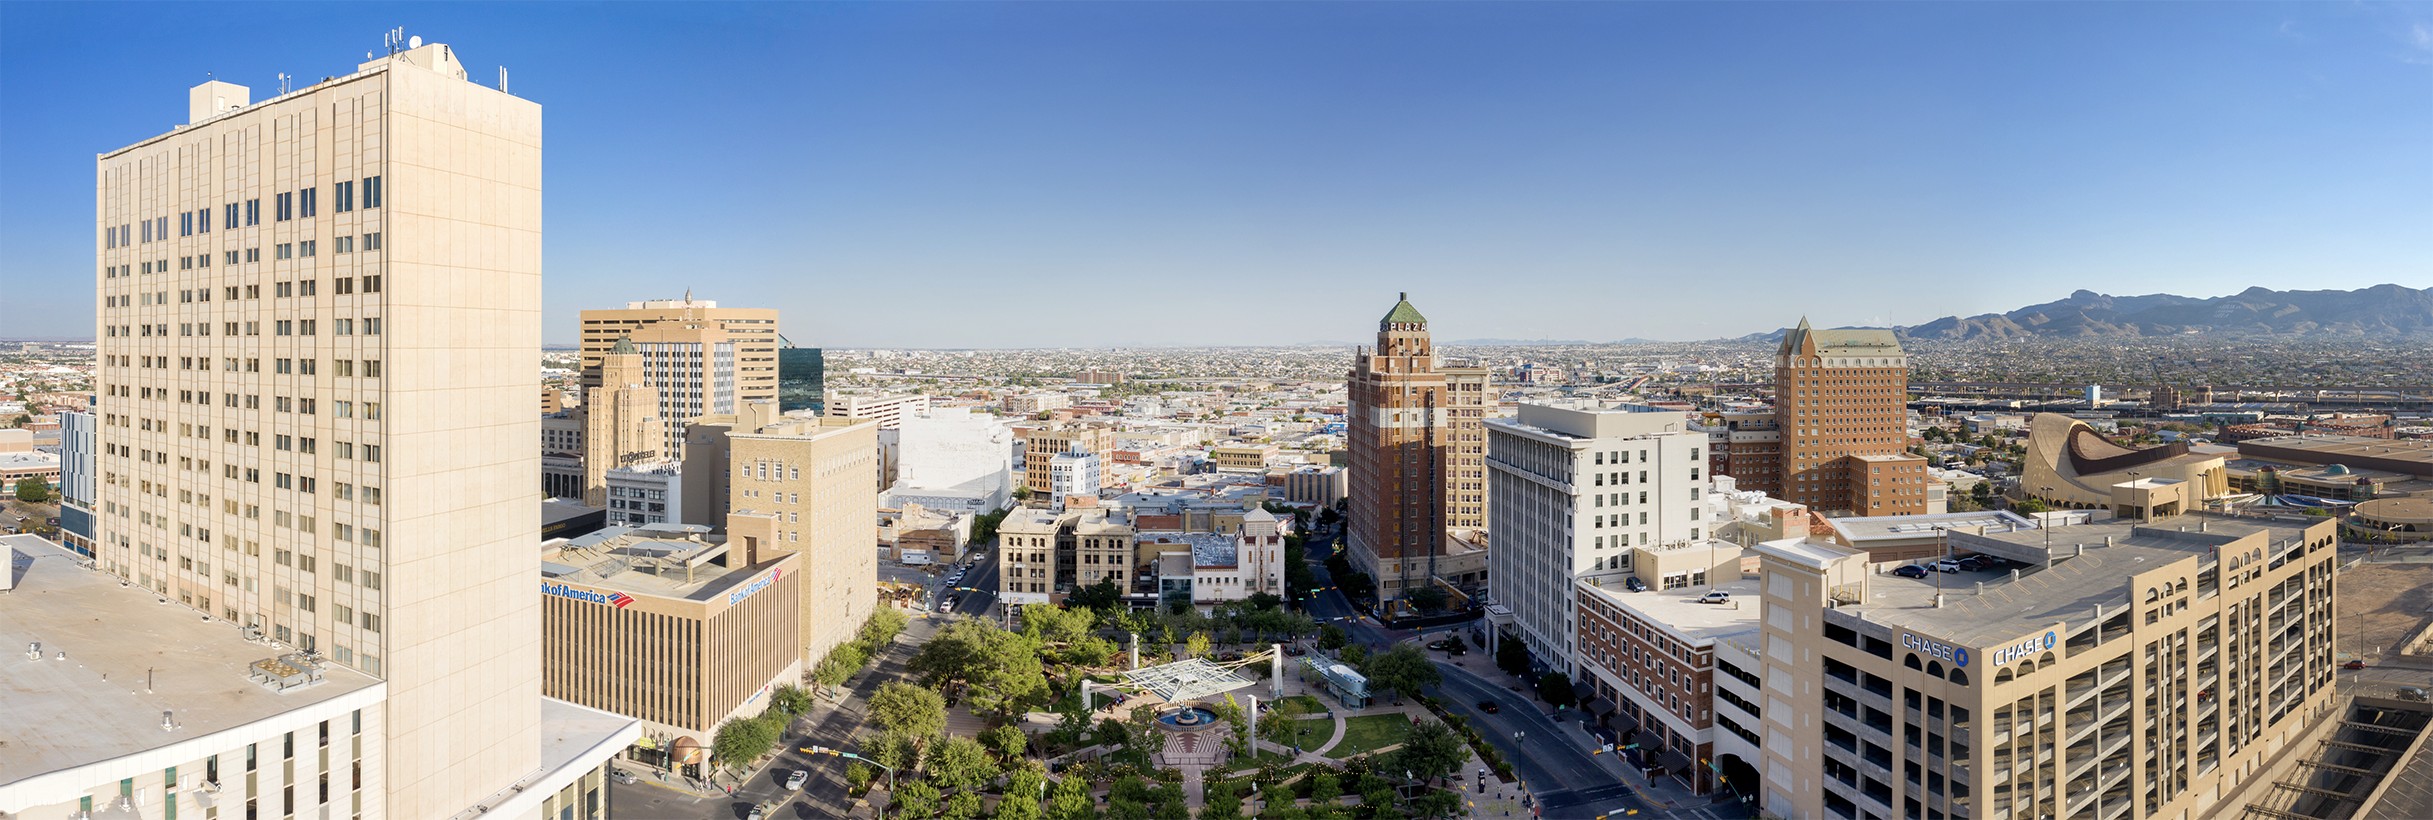 The City of El Paso Texas | LinkedIn